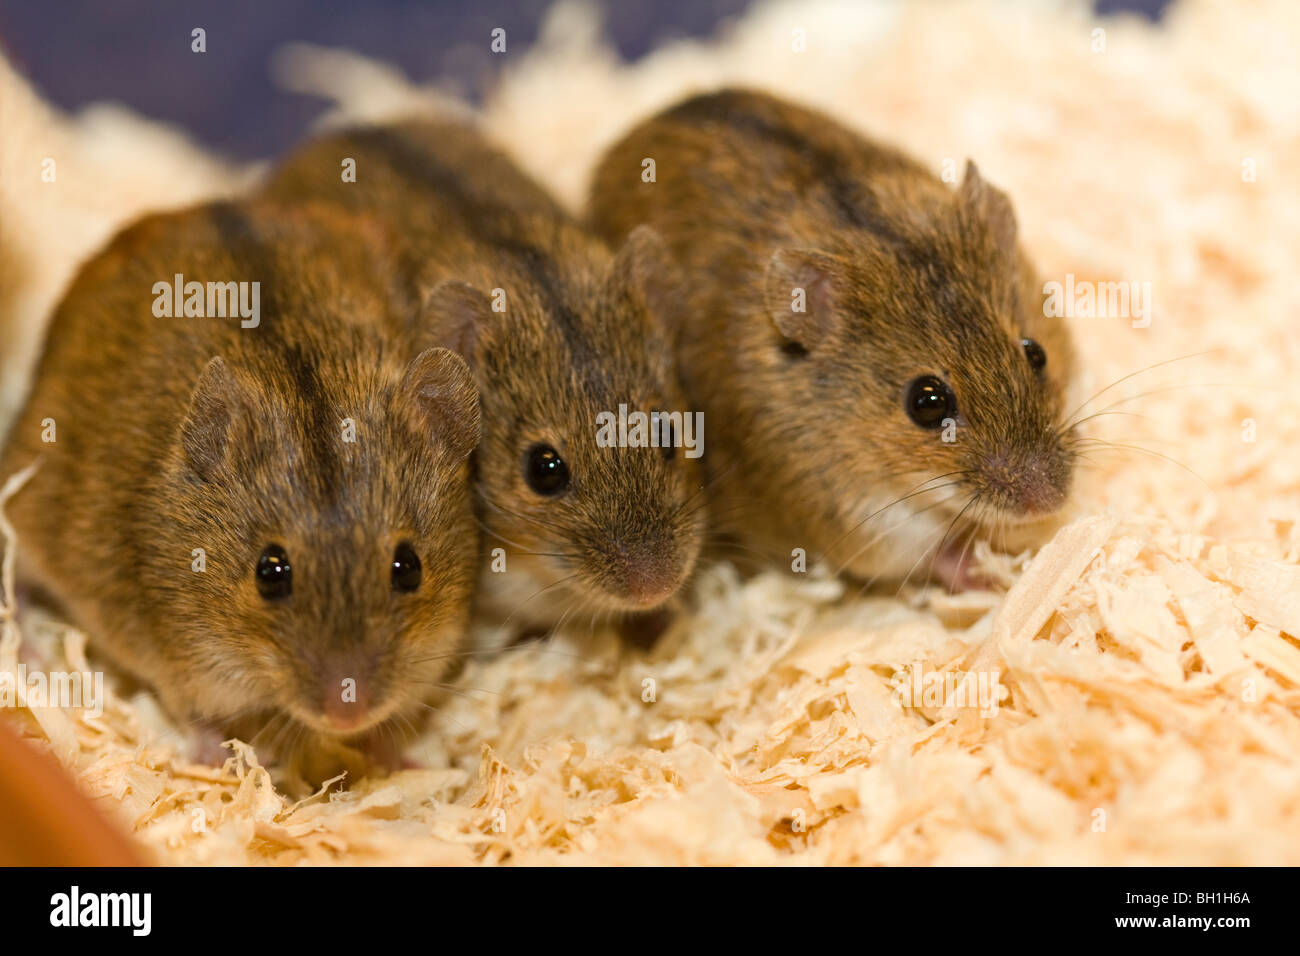 Striped Field Mouse Apodemus agrarius; Brandmus; Däggdjur; Mammals; Striped Field-Mouse Stock Photo